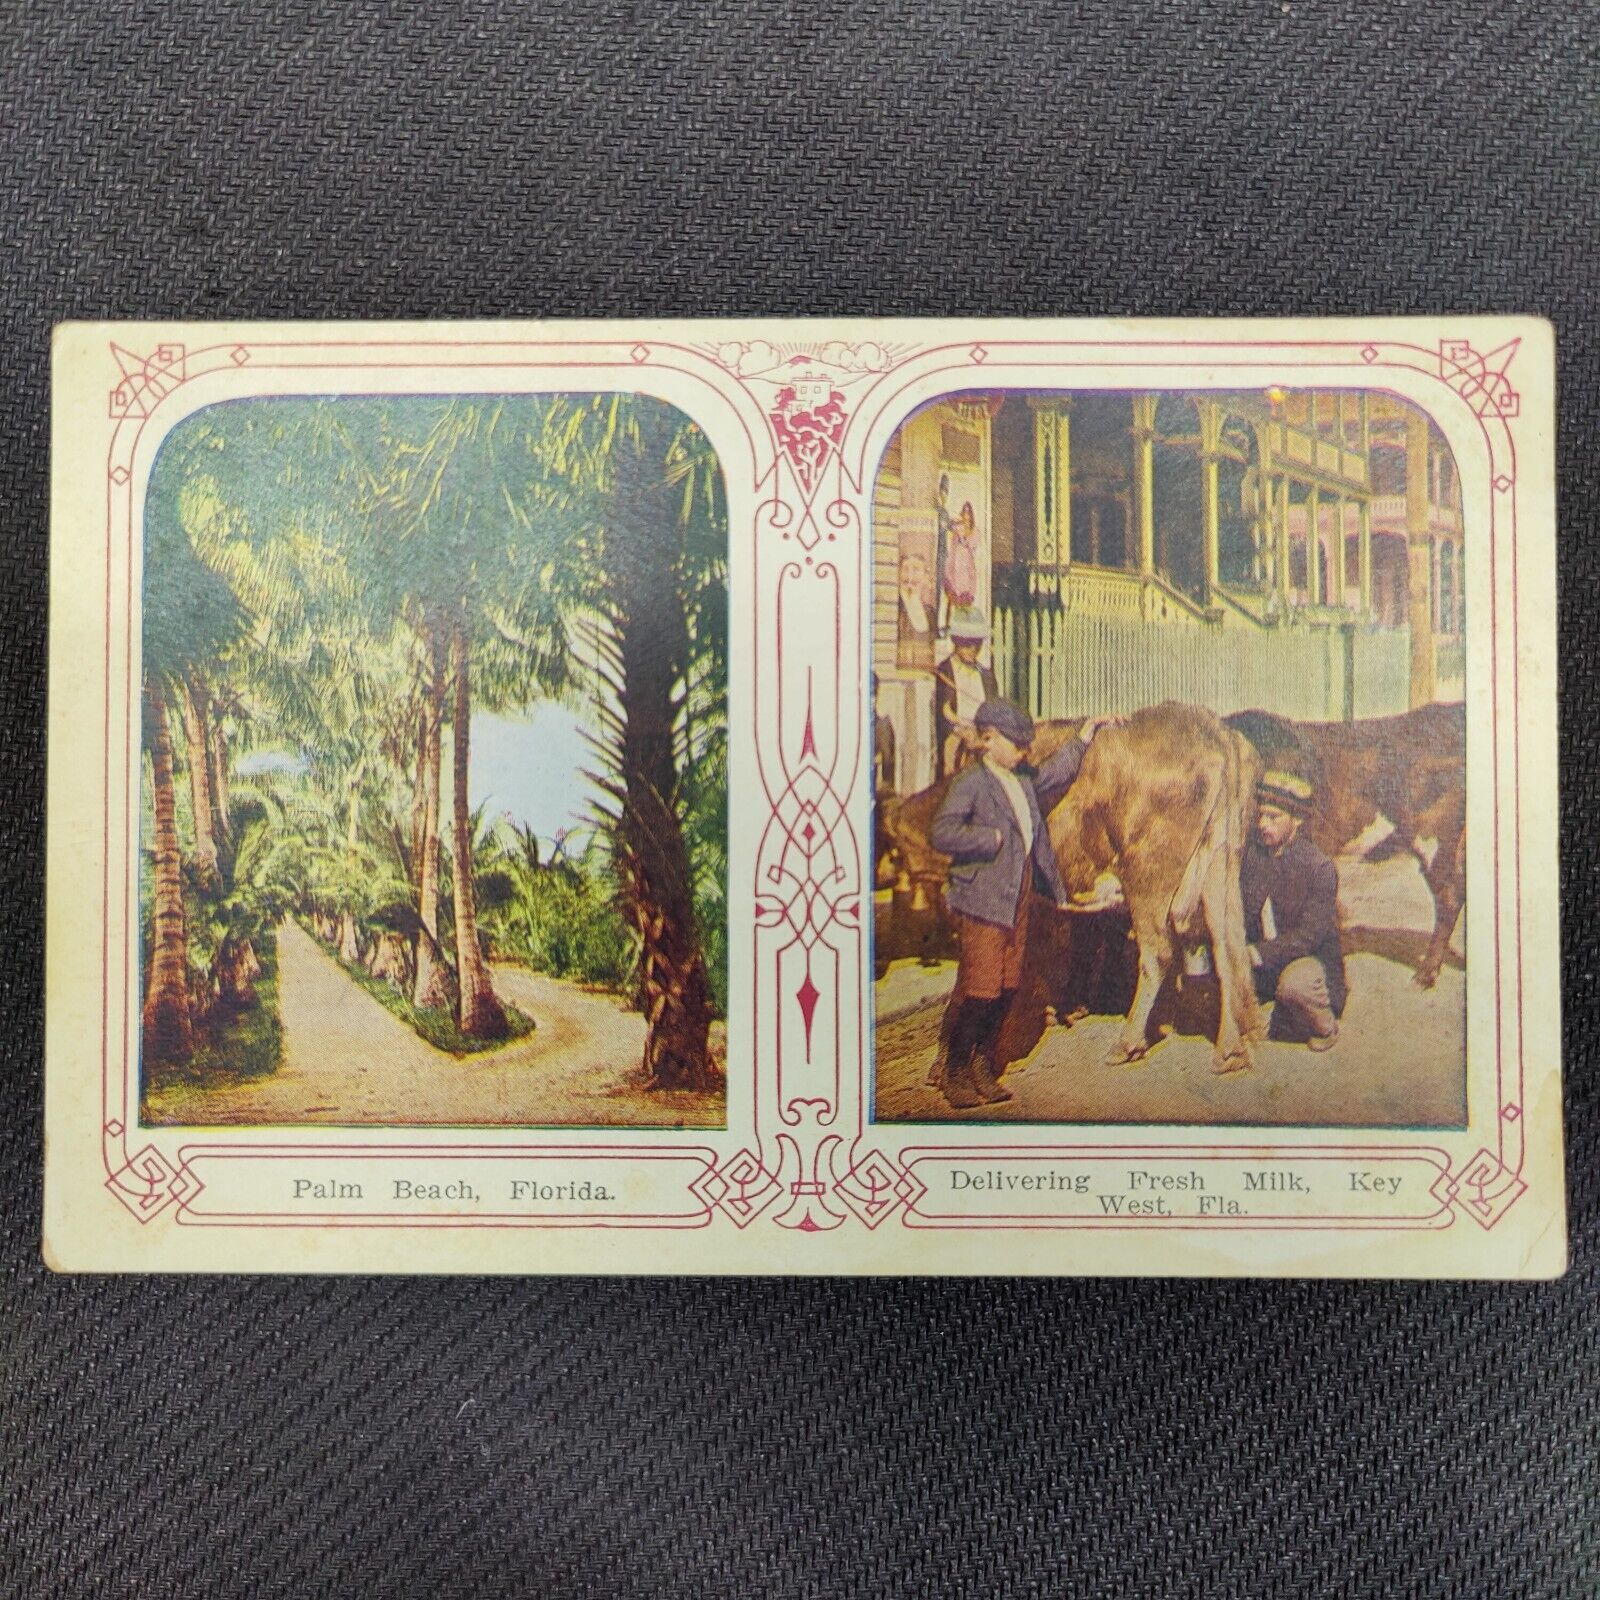 RARE Atq c. 1920s Postcard PALM BEACH FLORIDA + KEY WEST FLORIDA MILK DELIVERY